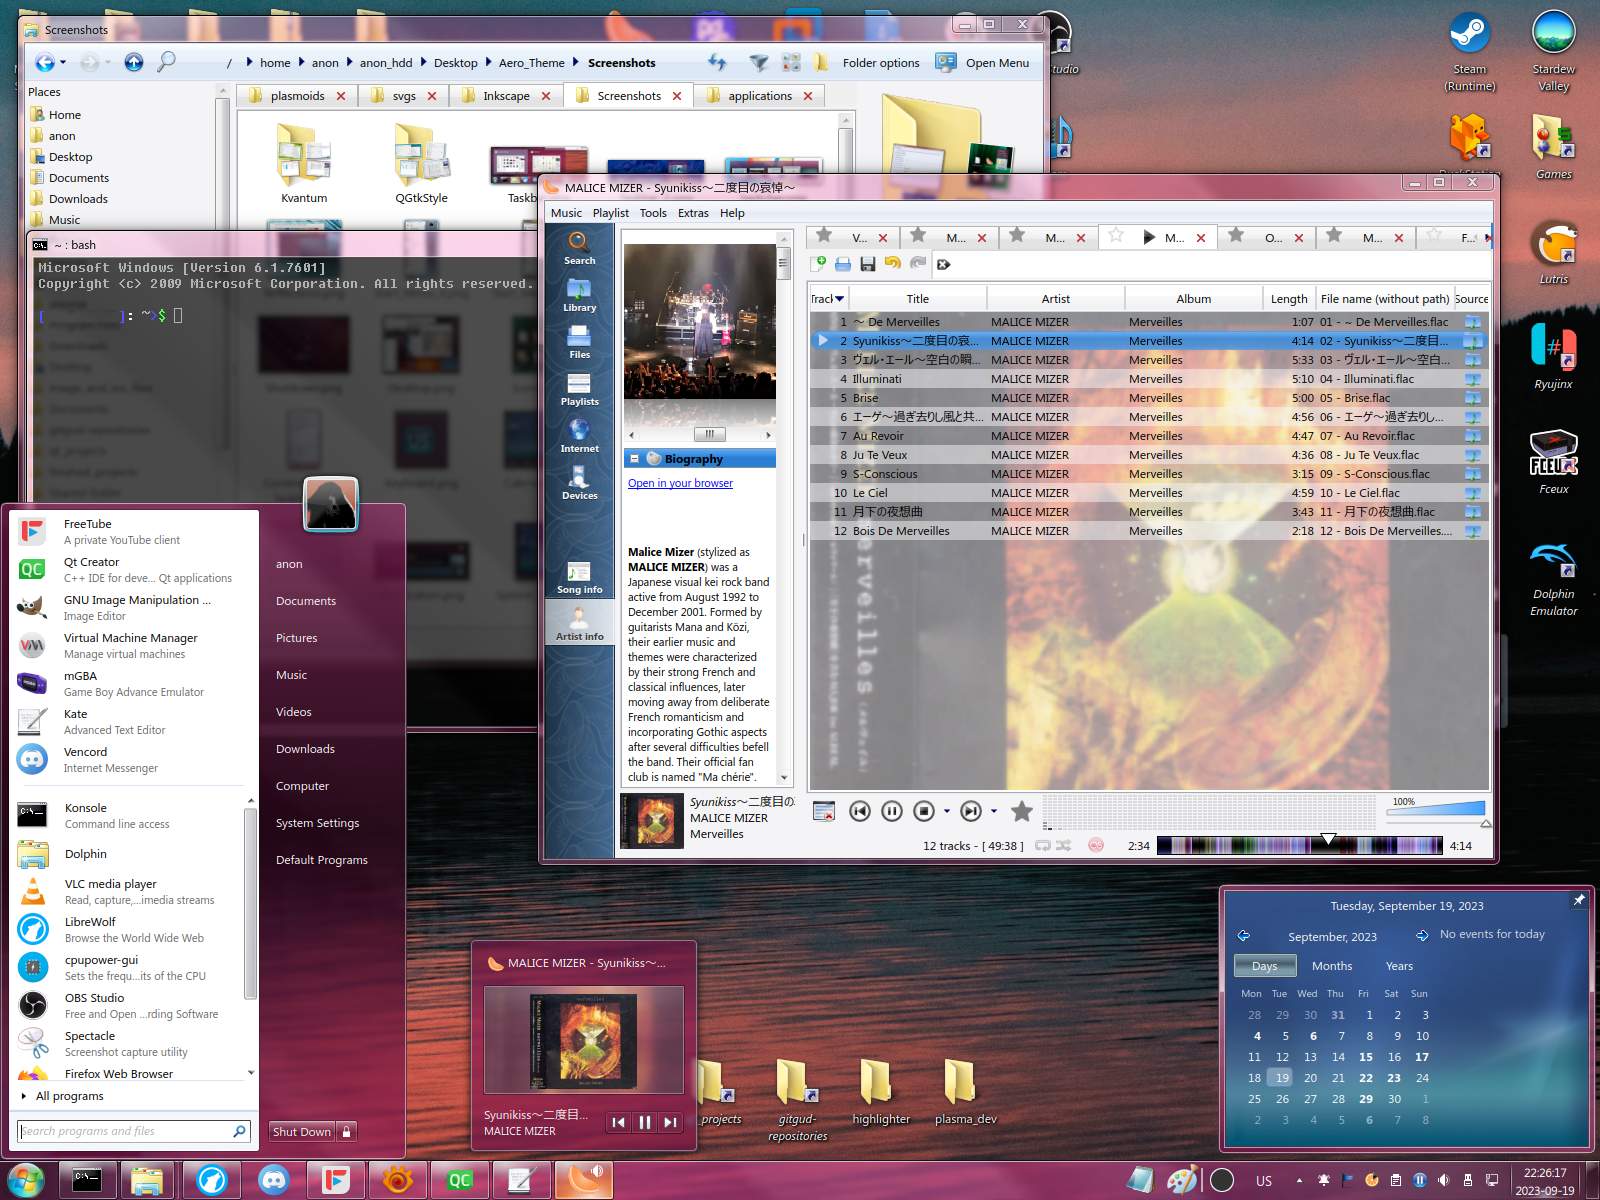 KDE Plasma brings Windows 7's Aero theme to Linux